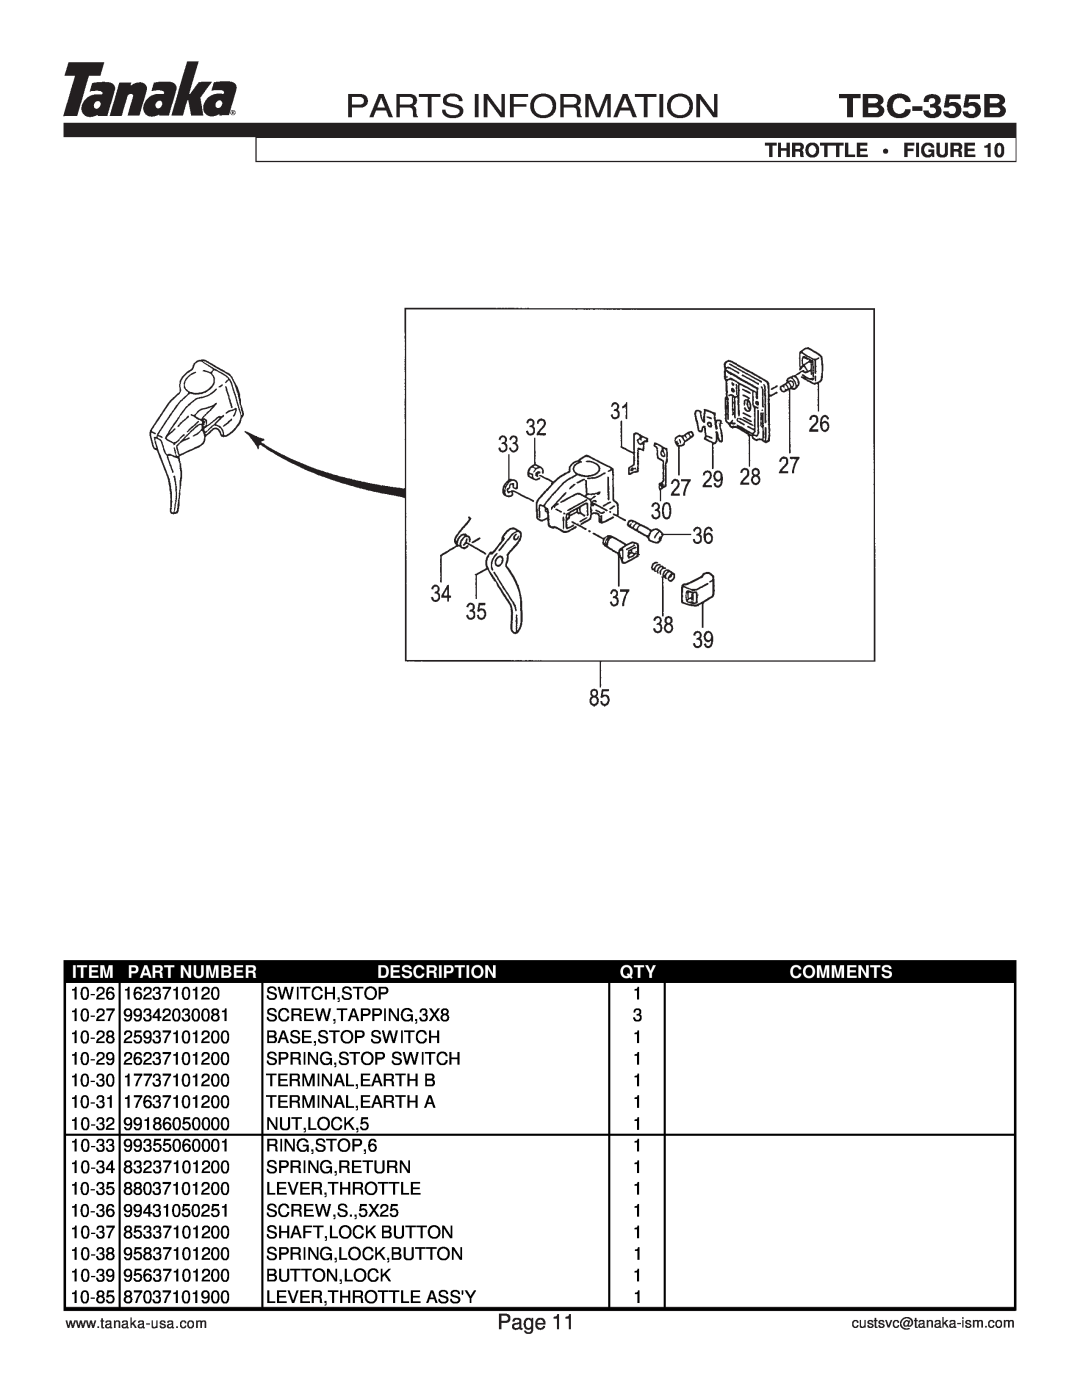 Tanaka TBC-355B manual Throttle • Figure, Parts Information, Page, Item, Part Number, Description, Comments 